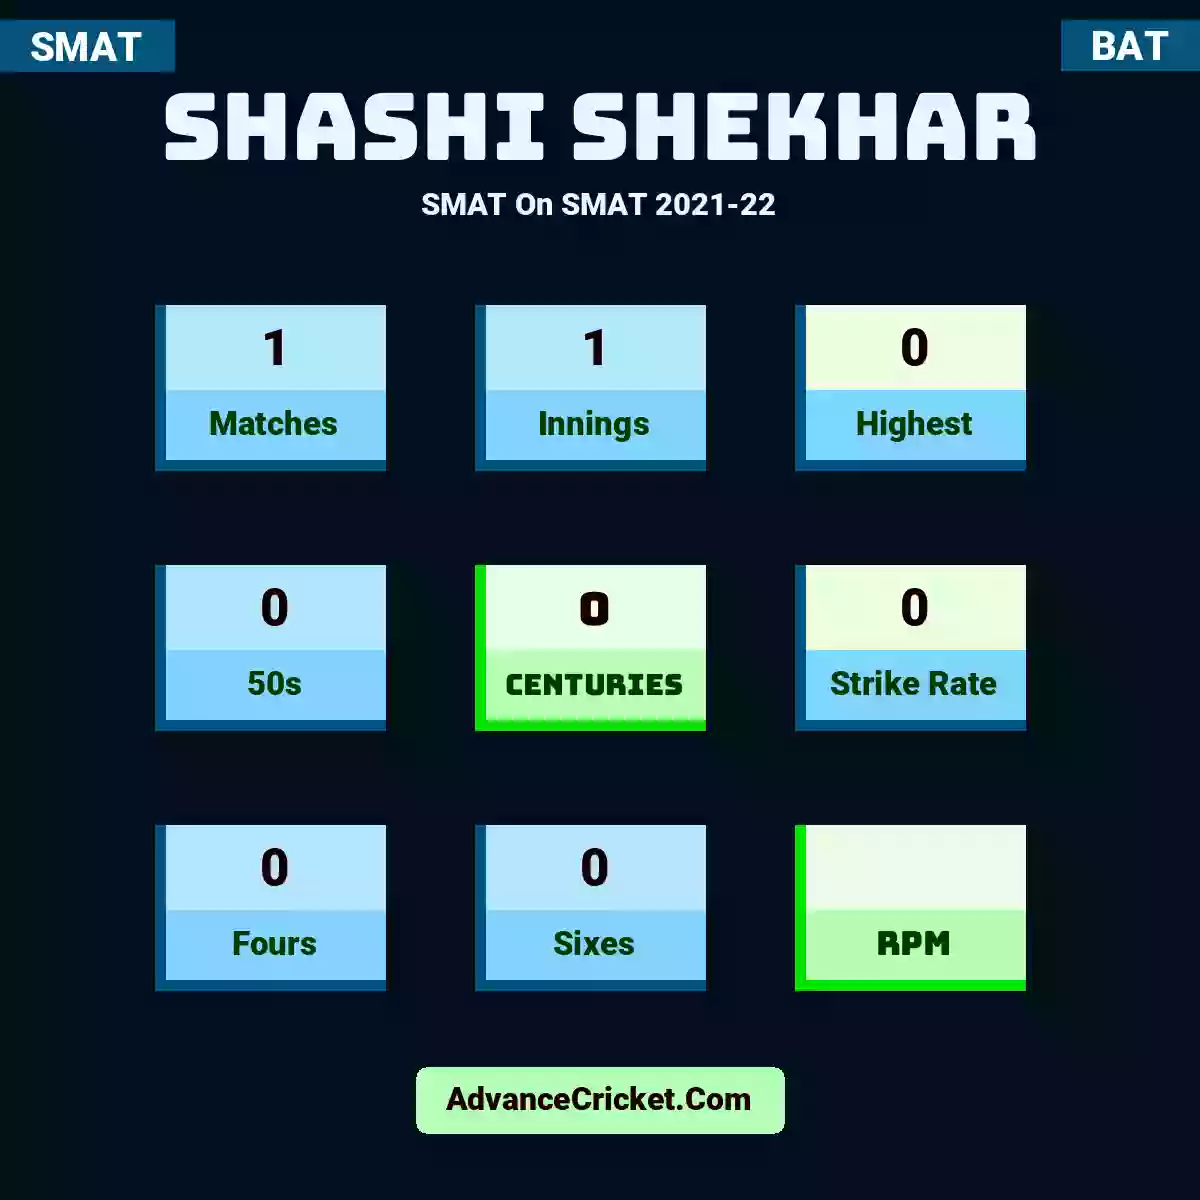 Shashi Shekhar SMAT  On SMAT 2021-22, Shashi Shekhar played 1 matches, scored 0 runs as highest, 0 half-centuries, and 0 centuries, with a strike rate of 0. S.Shekhar hit 0 fours and 0 sixes.